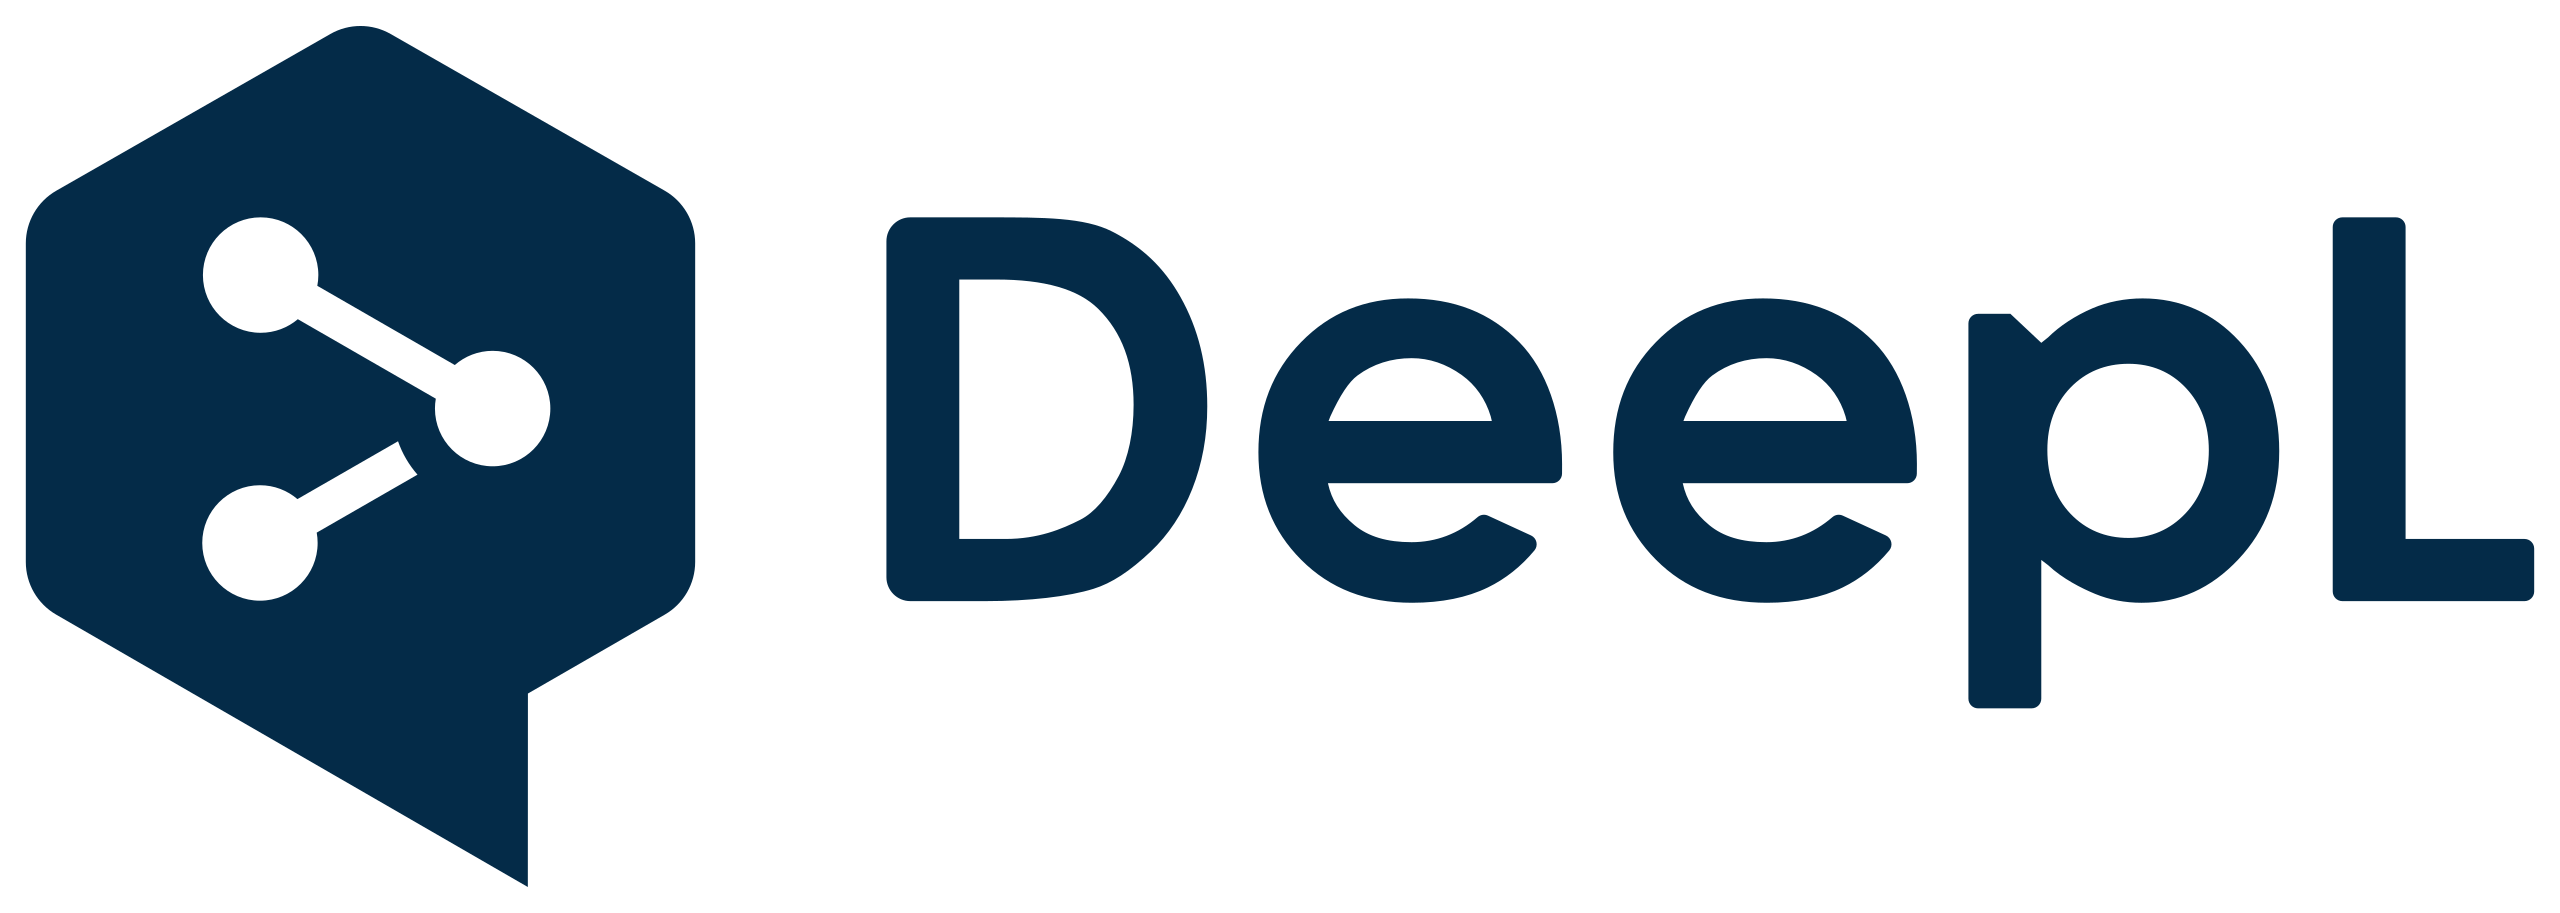 File:DeepL logo.svg - Wikimedia Commons